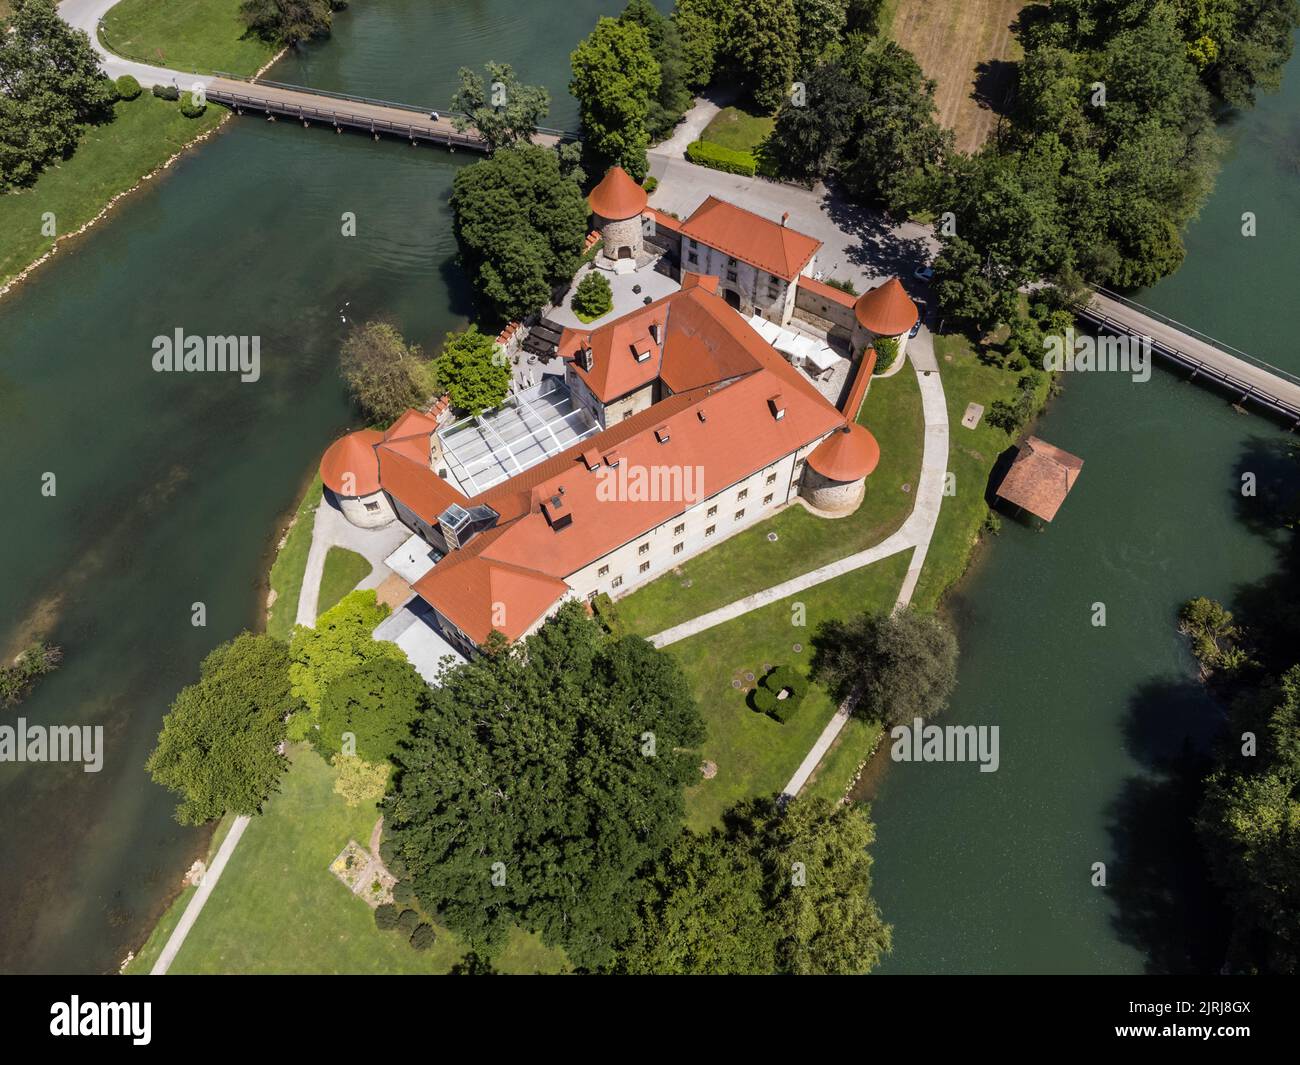 Romantic Otocec Castle on Krka River in Slovenia. Drone View. Stock Photo